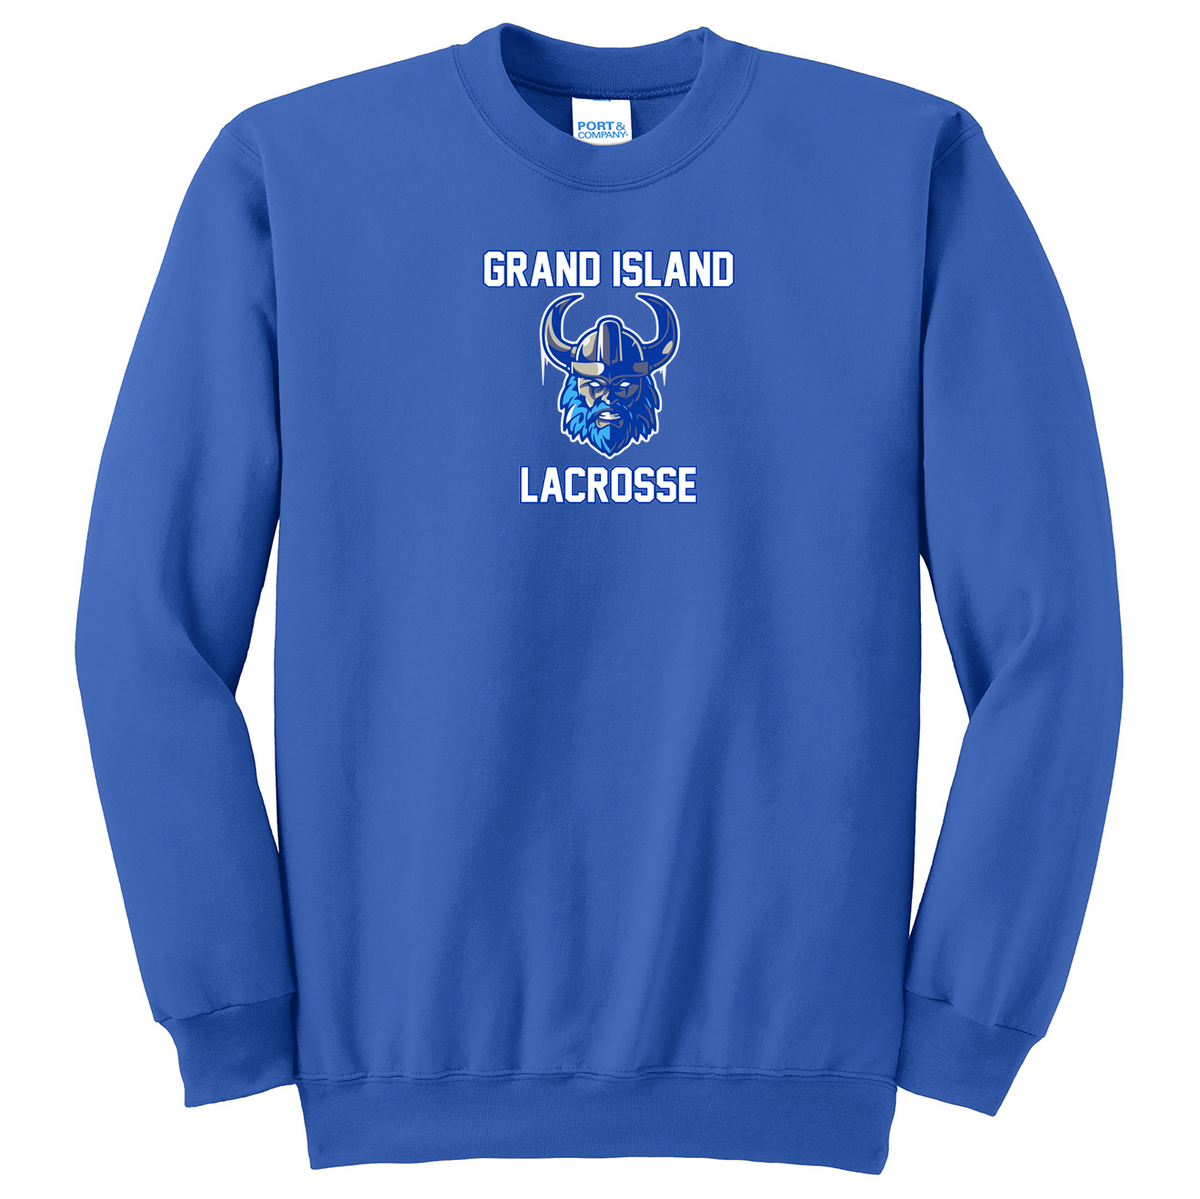 Grand Island Lacrosse Crew Neck Sweater